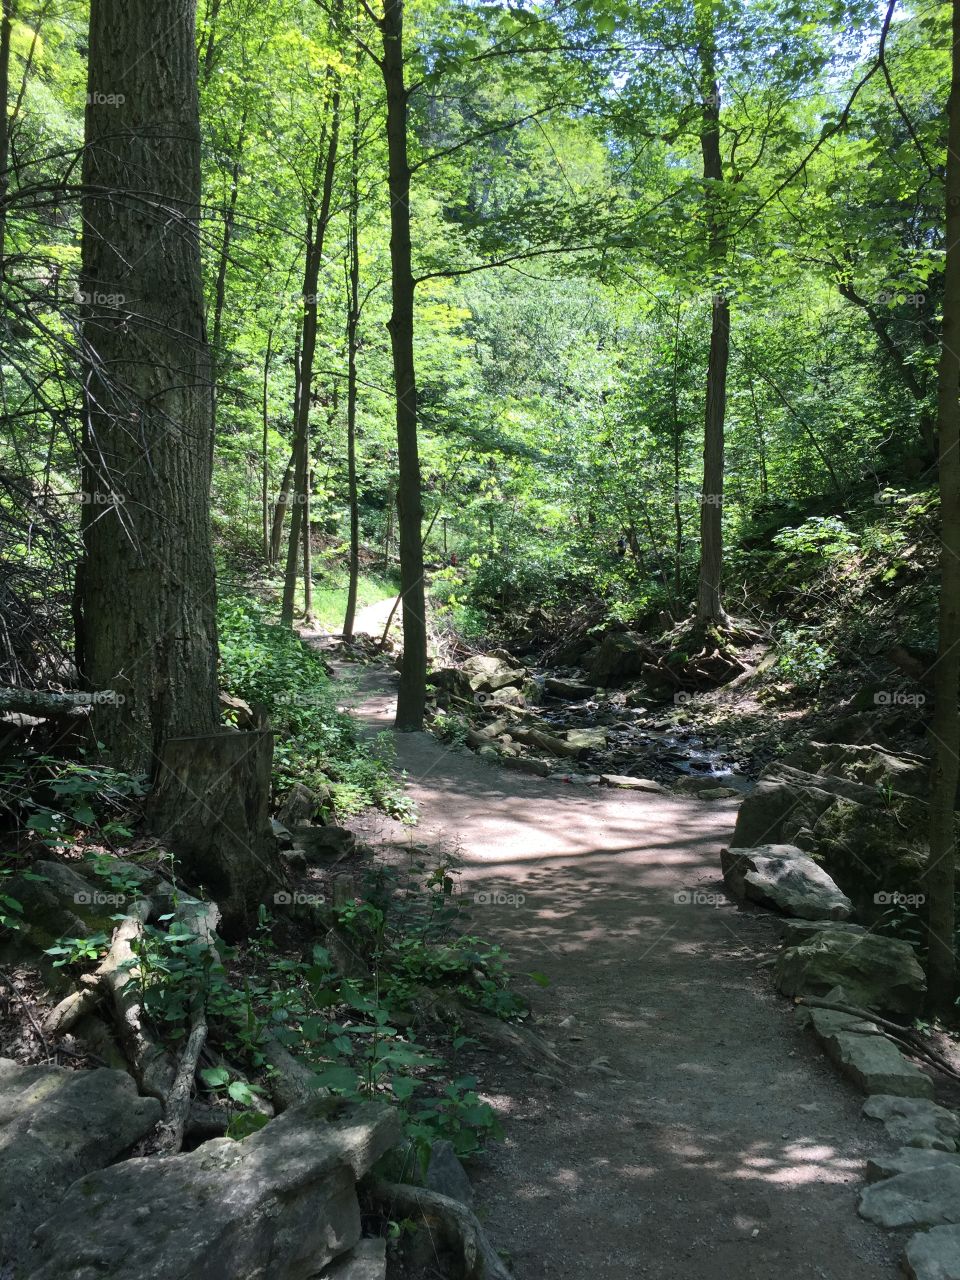 Pathway through nature 